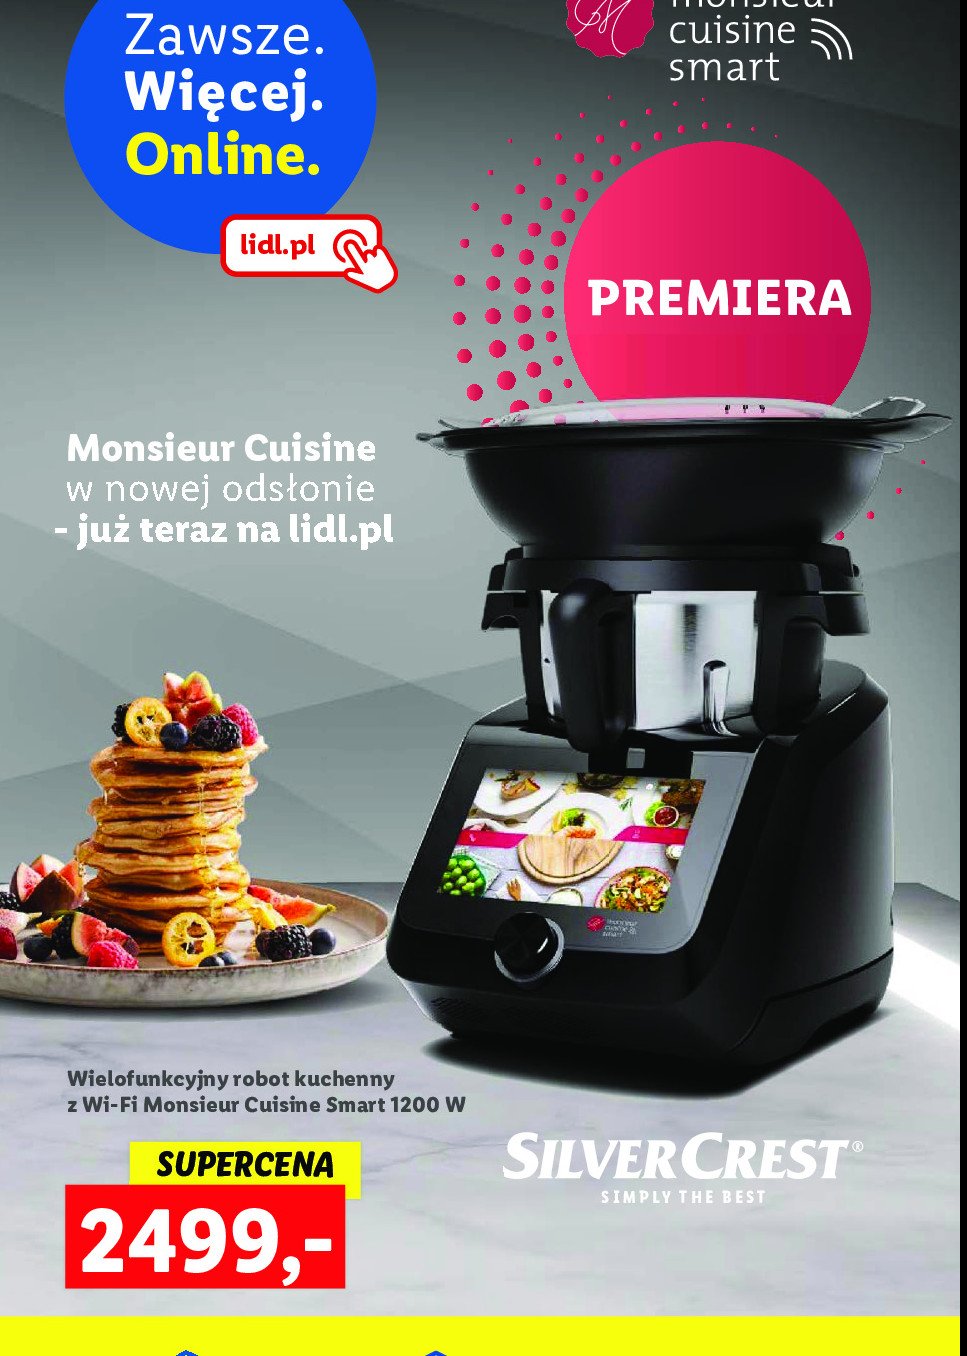 Robot kuchenny monsieur cuisine 1200 w Silvercrest promocja